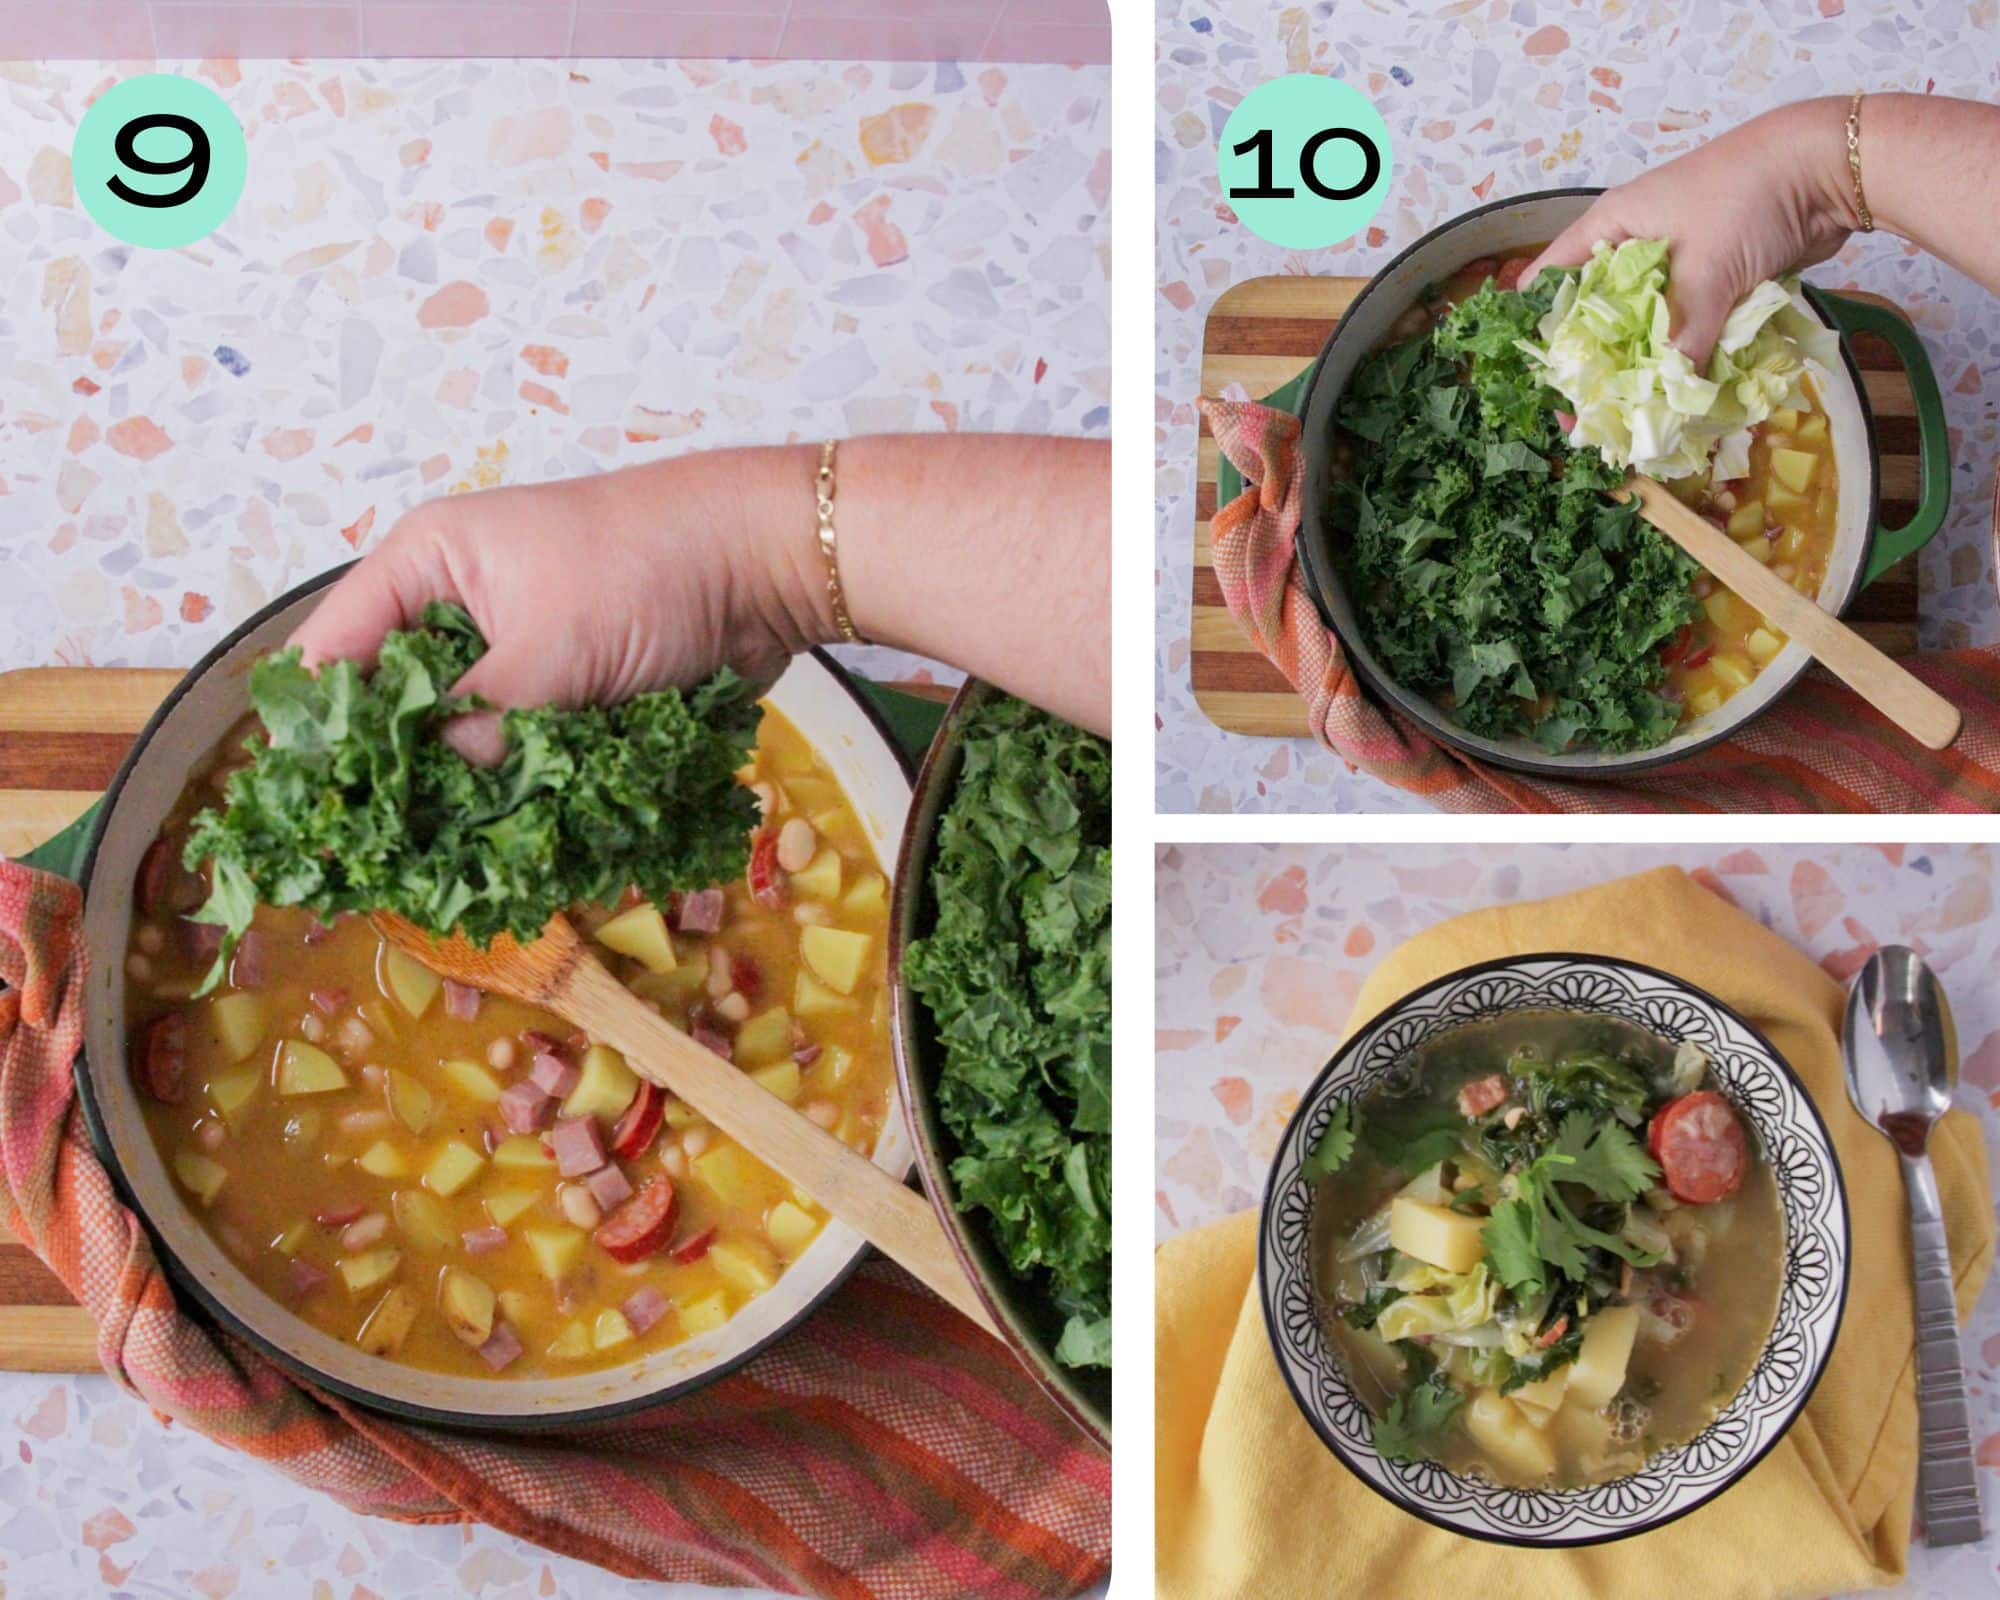 Steps 9-10 for Caldo Gallego. 9.Add kale. 10. Adding cabbage. 